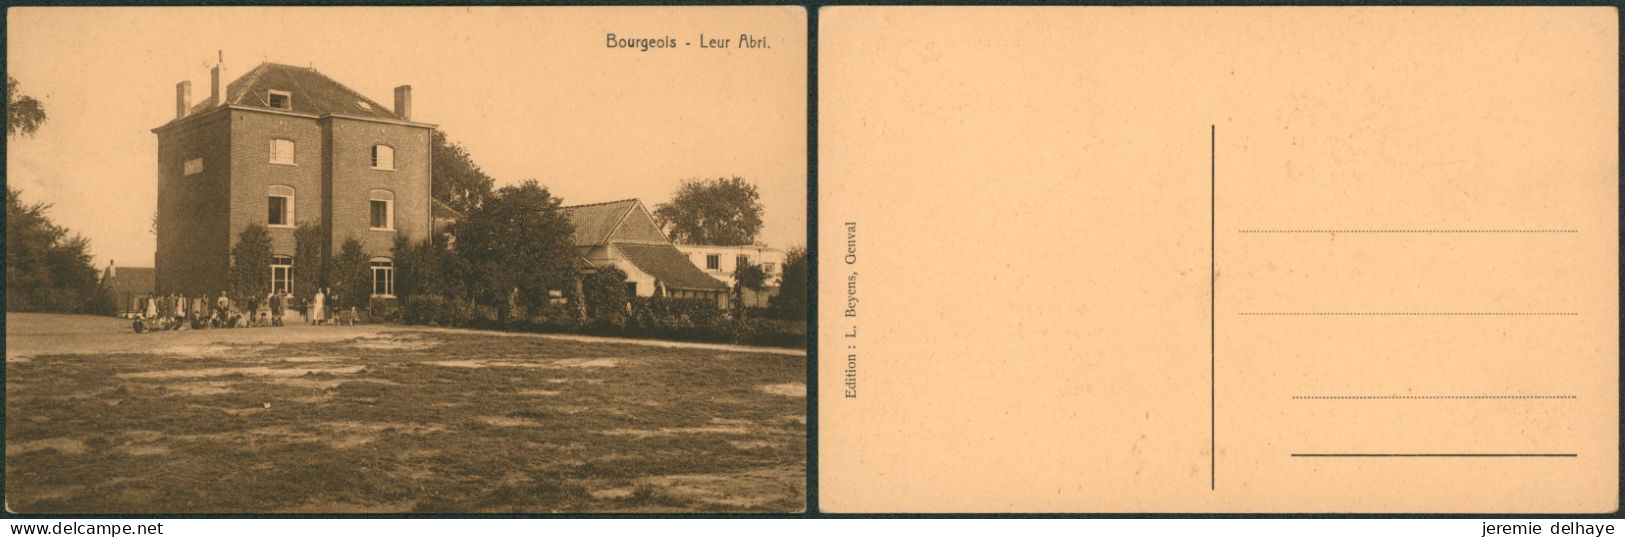 Carte Postale - Bourgeois : Leur Abri (Edit. L. Beyens, Genval) - Rixensart